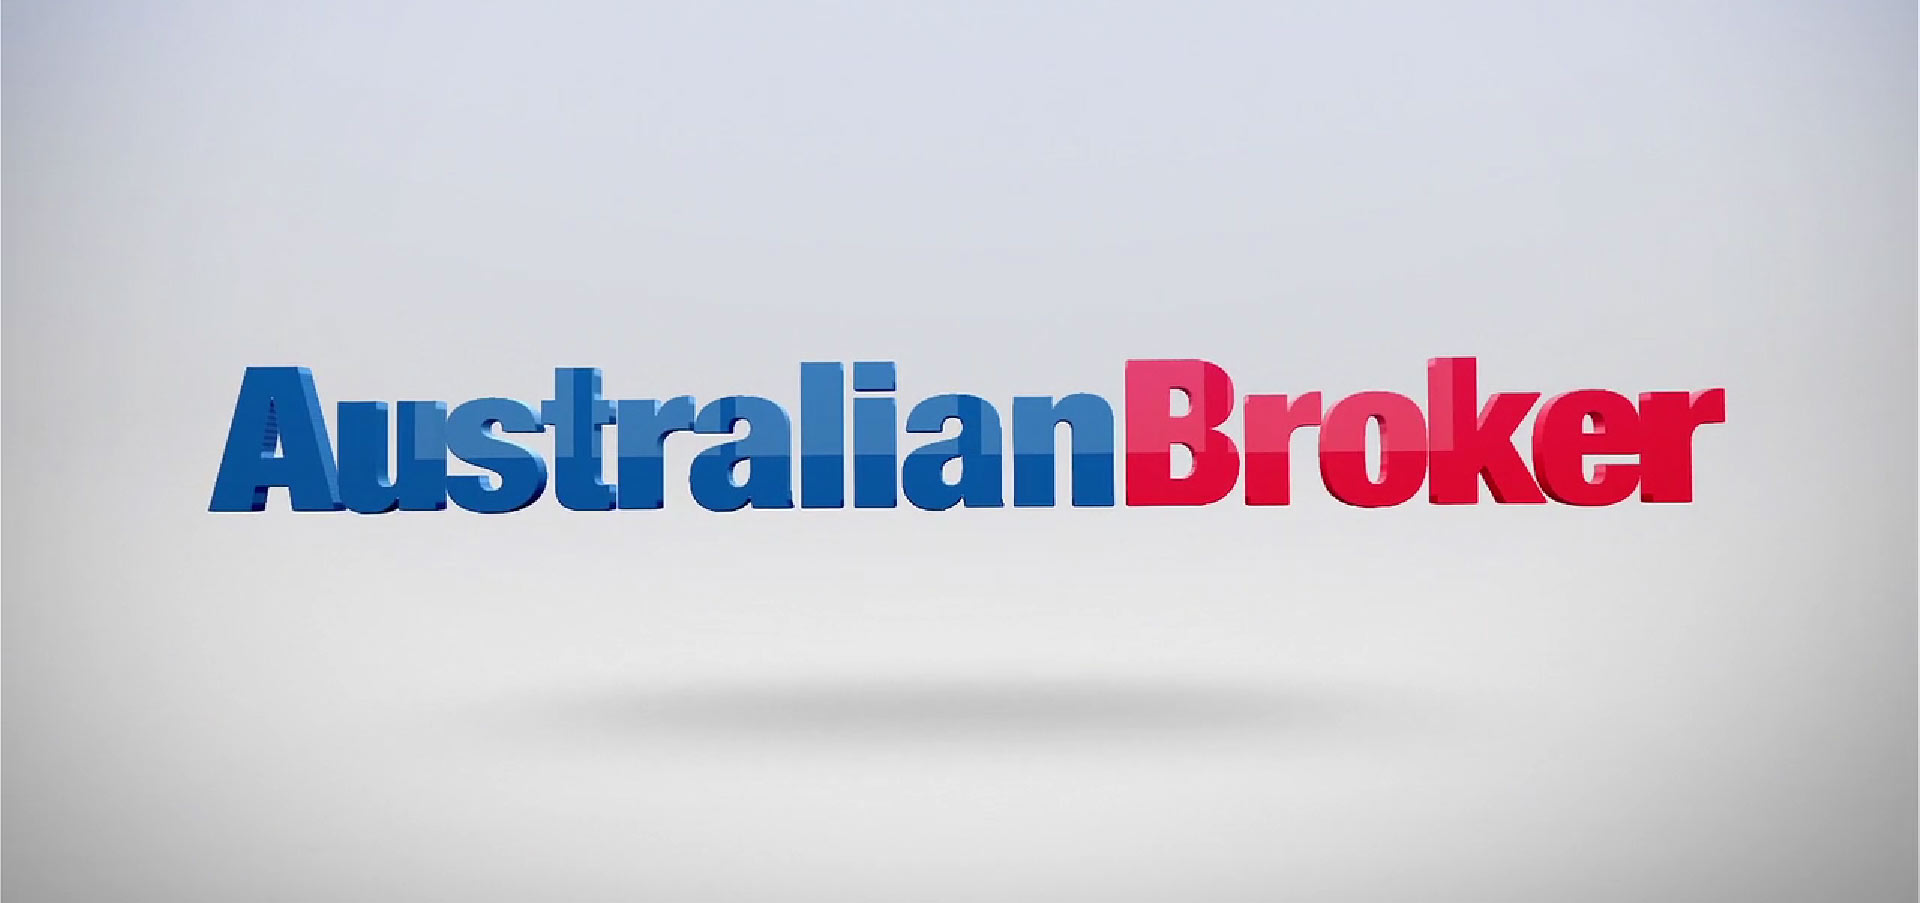 Australian Brokerage